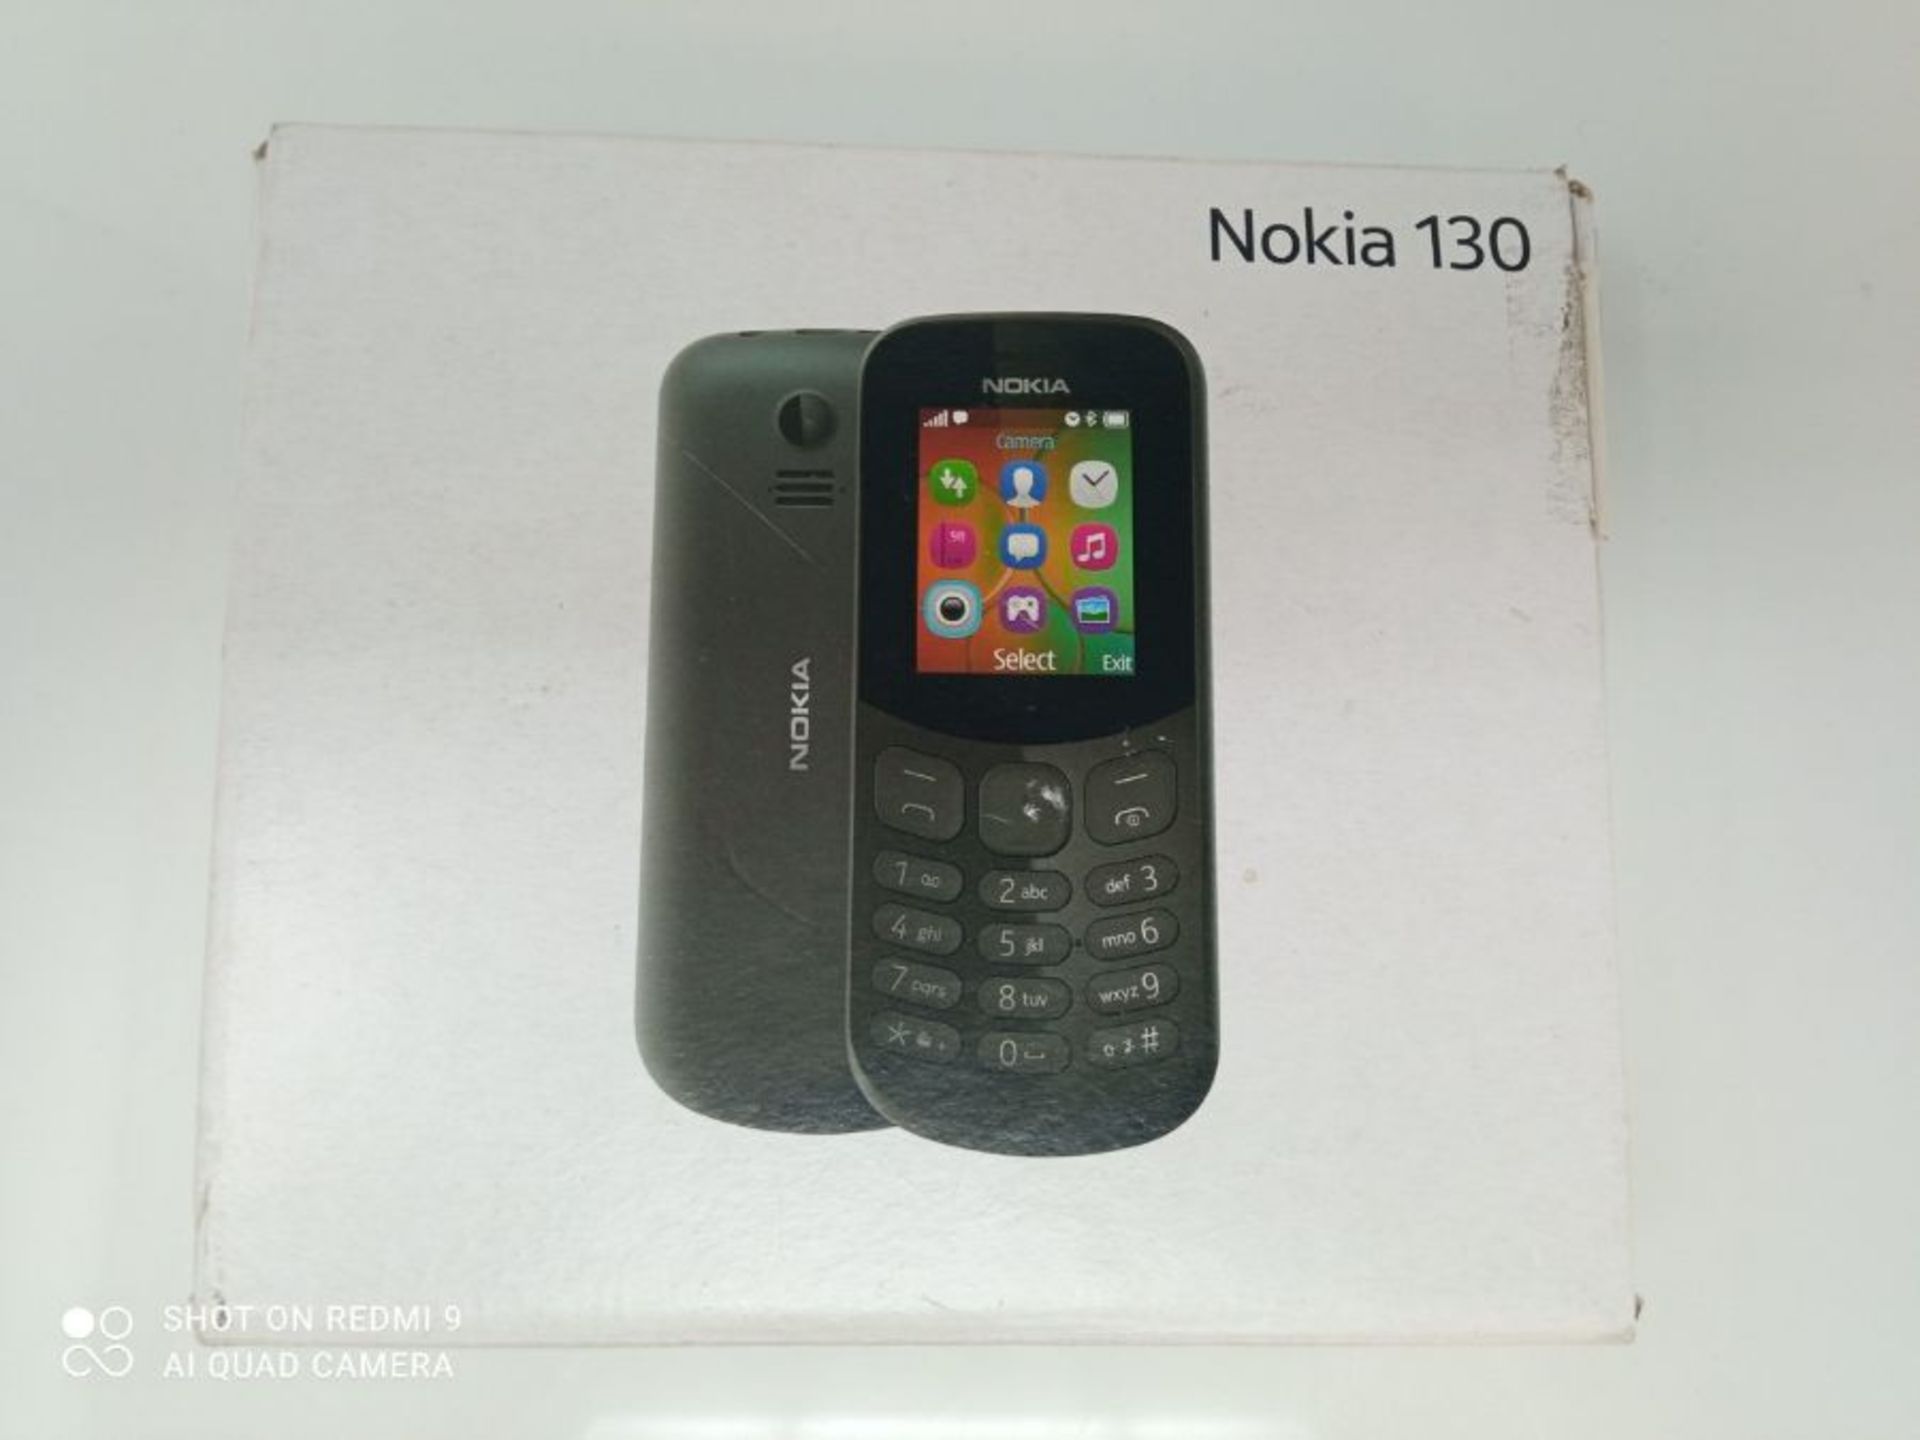 Nokia 130 SIM-Free Mobile Phone (2017 Edition) - Black - Image 3 of 3